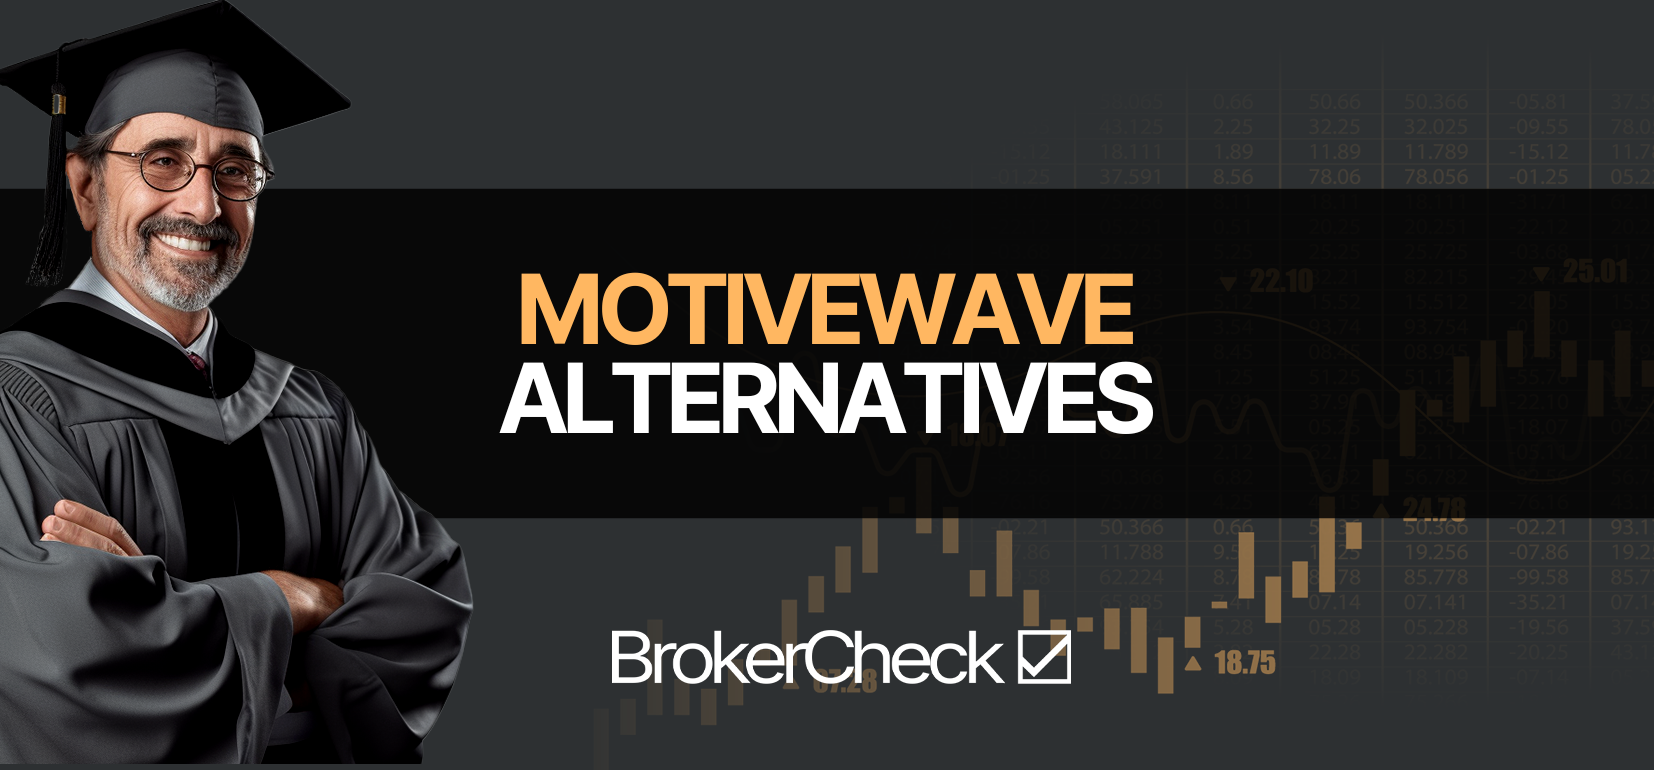 MotiveWave Alternatives